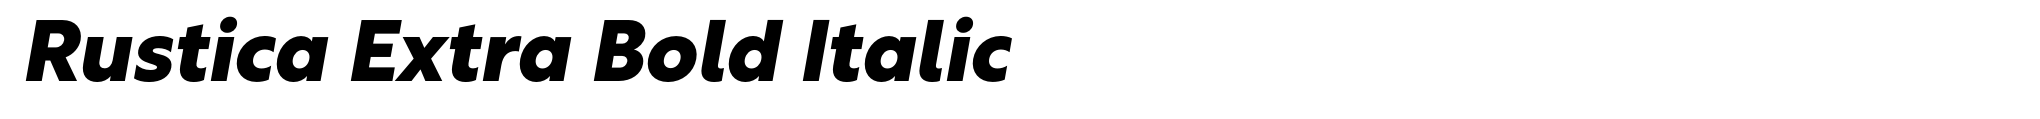 Rustica Extra Bold Italic image